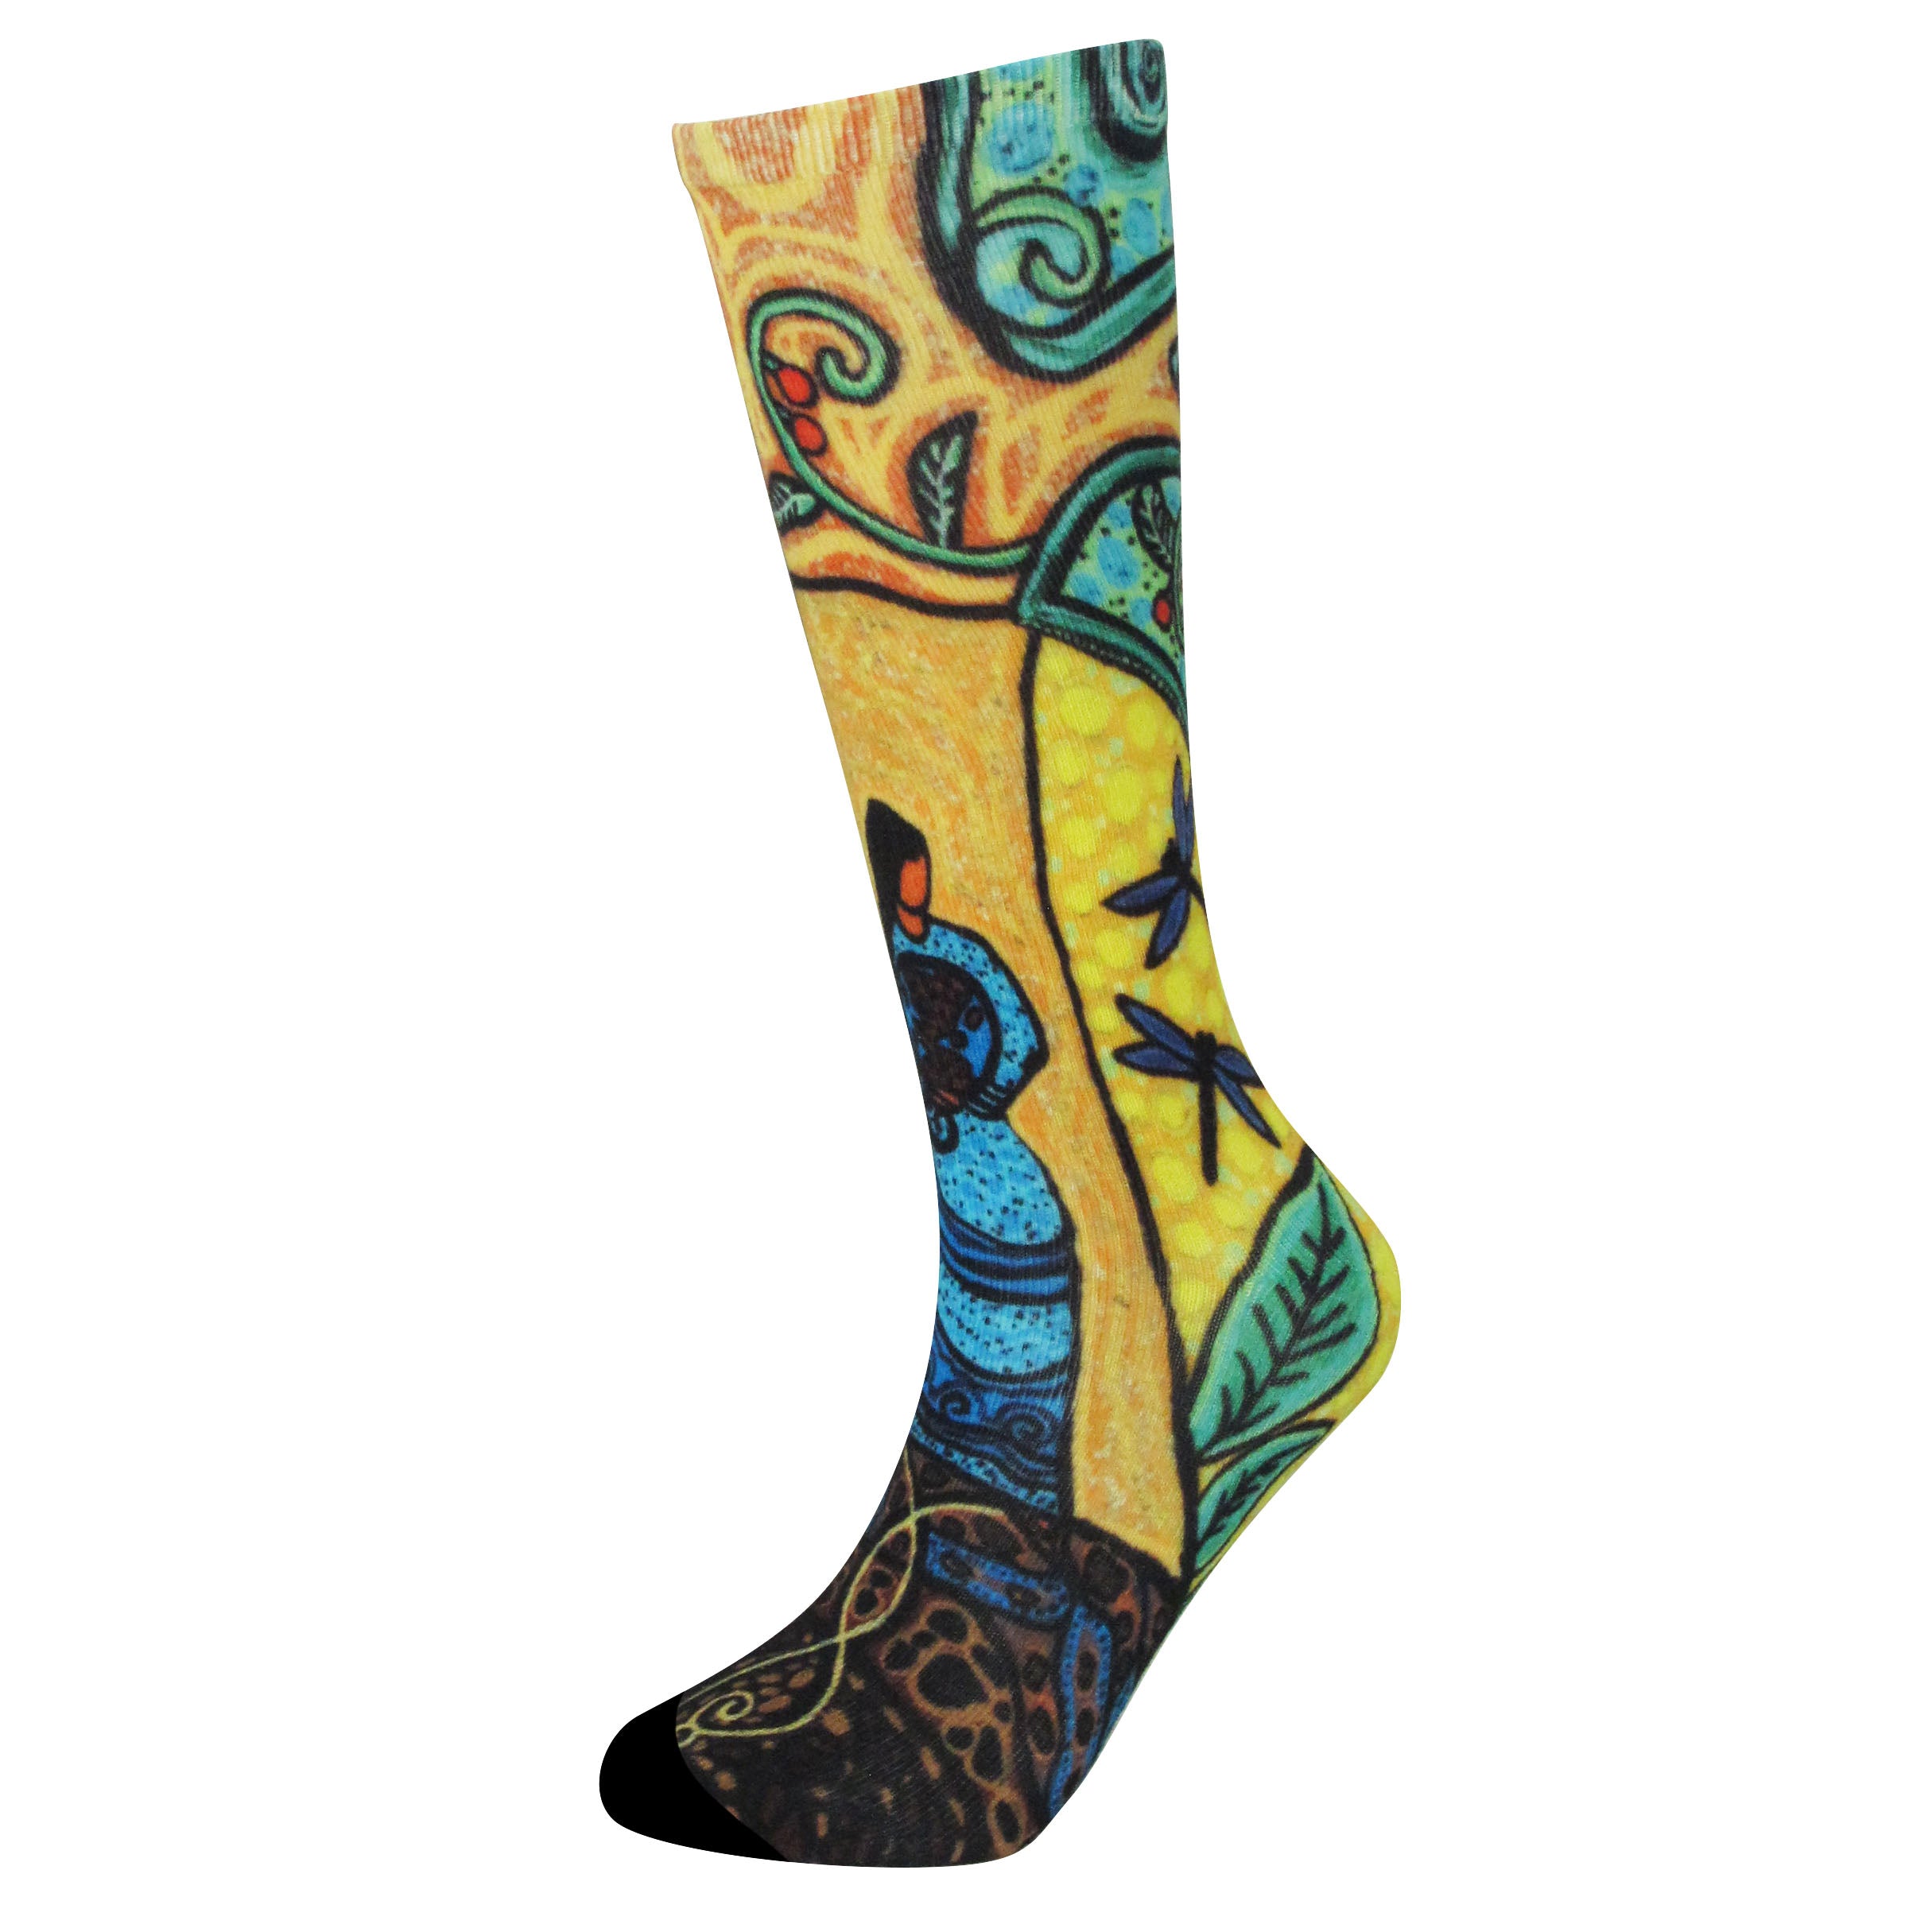 Leah Dorion Strong Earth Woman Art Socks